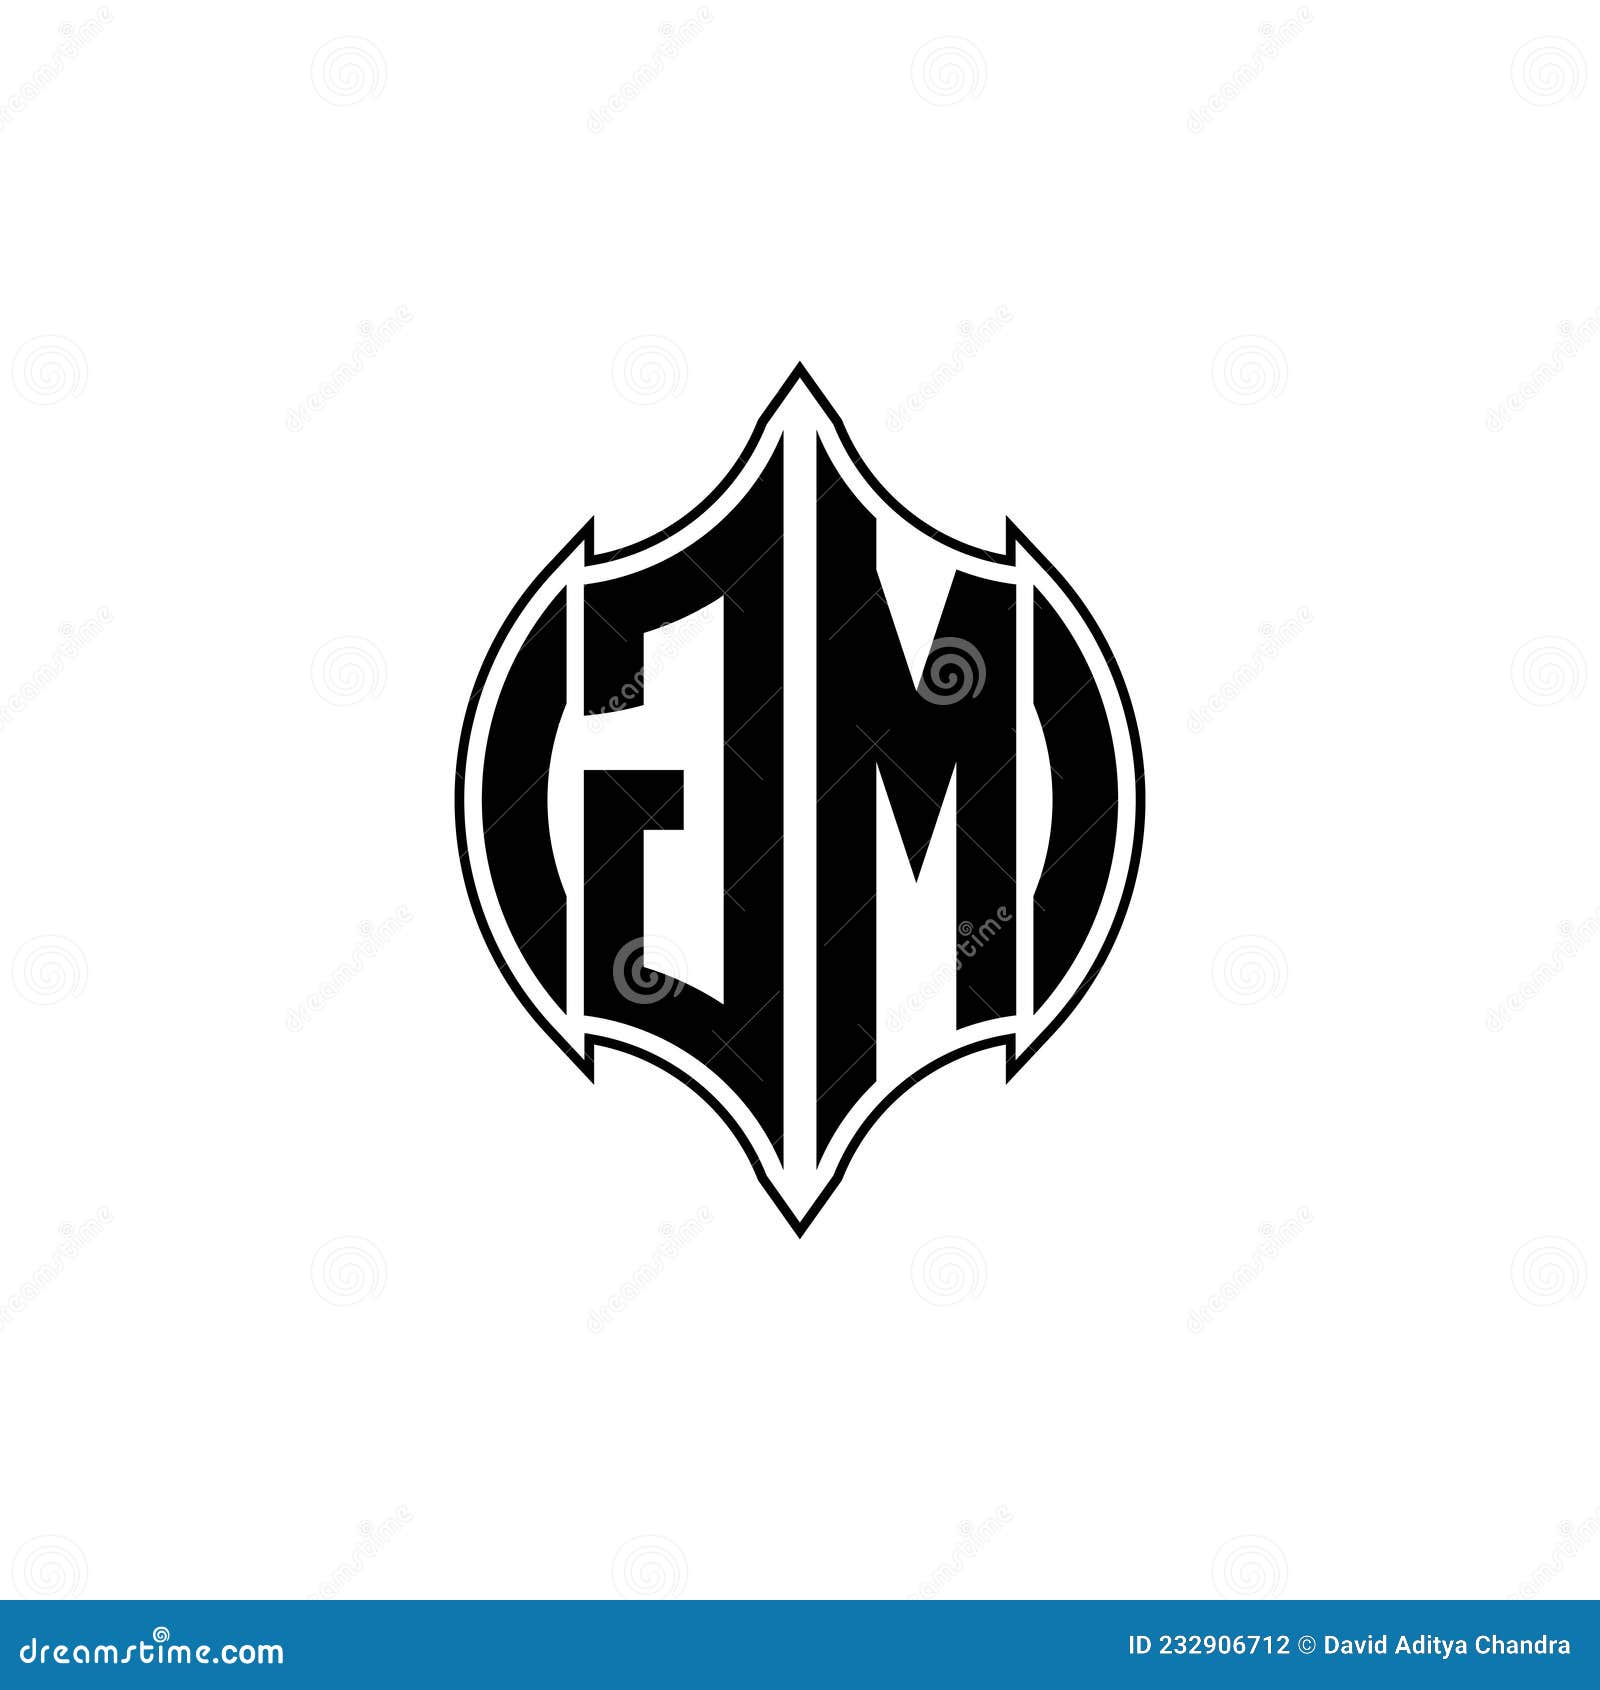 Gm logo monogram with emblem style isolated Vector Image